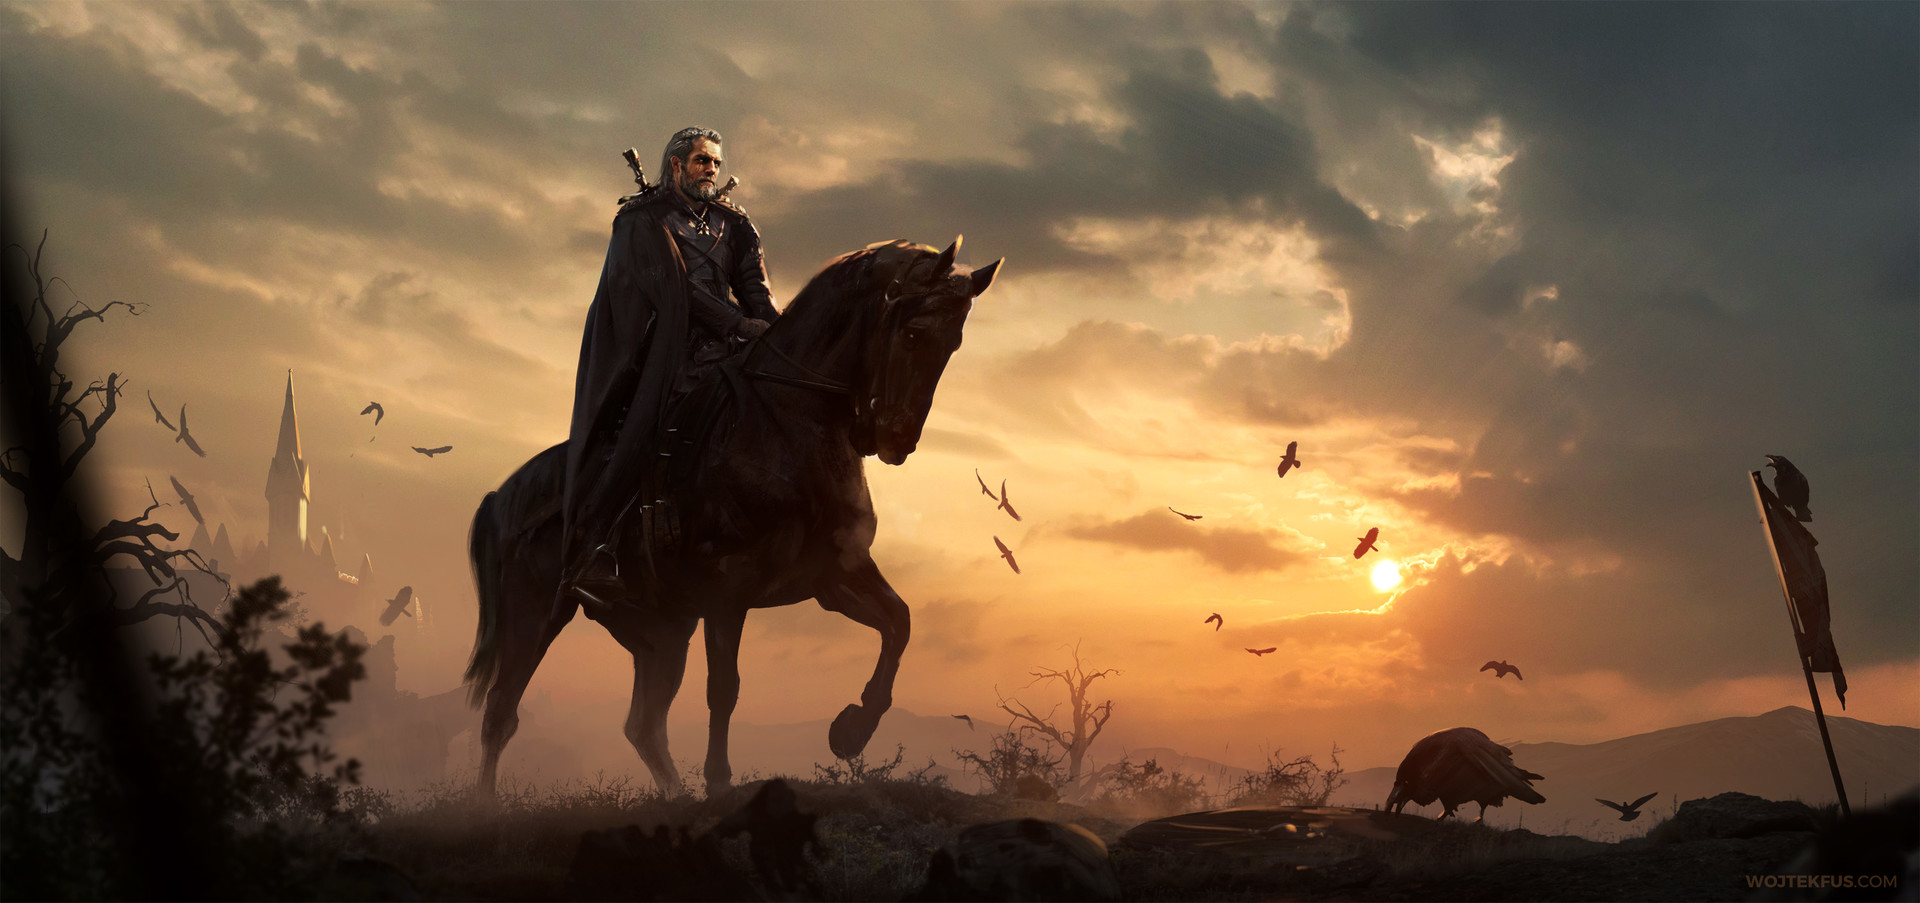 Digital Art Artwork Video Games The Witcher Geralt Of Rivia The Witcher 3 Wild Hunt Horse Roach 1920x903